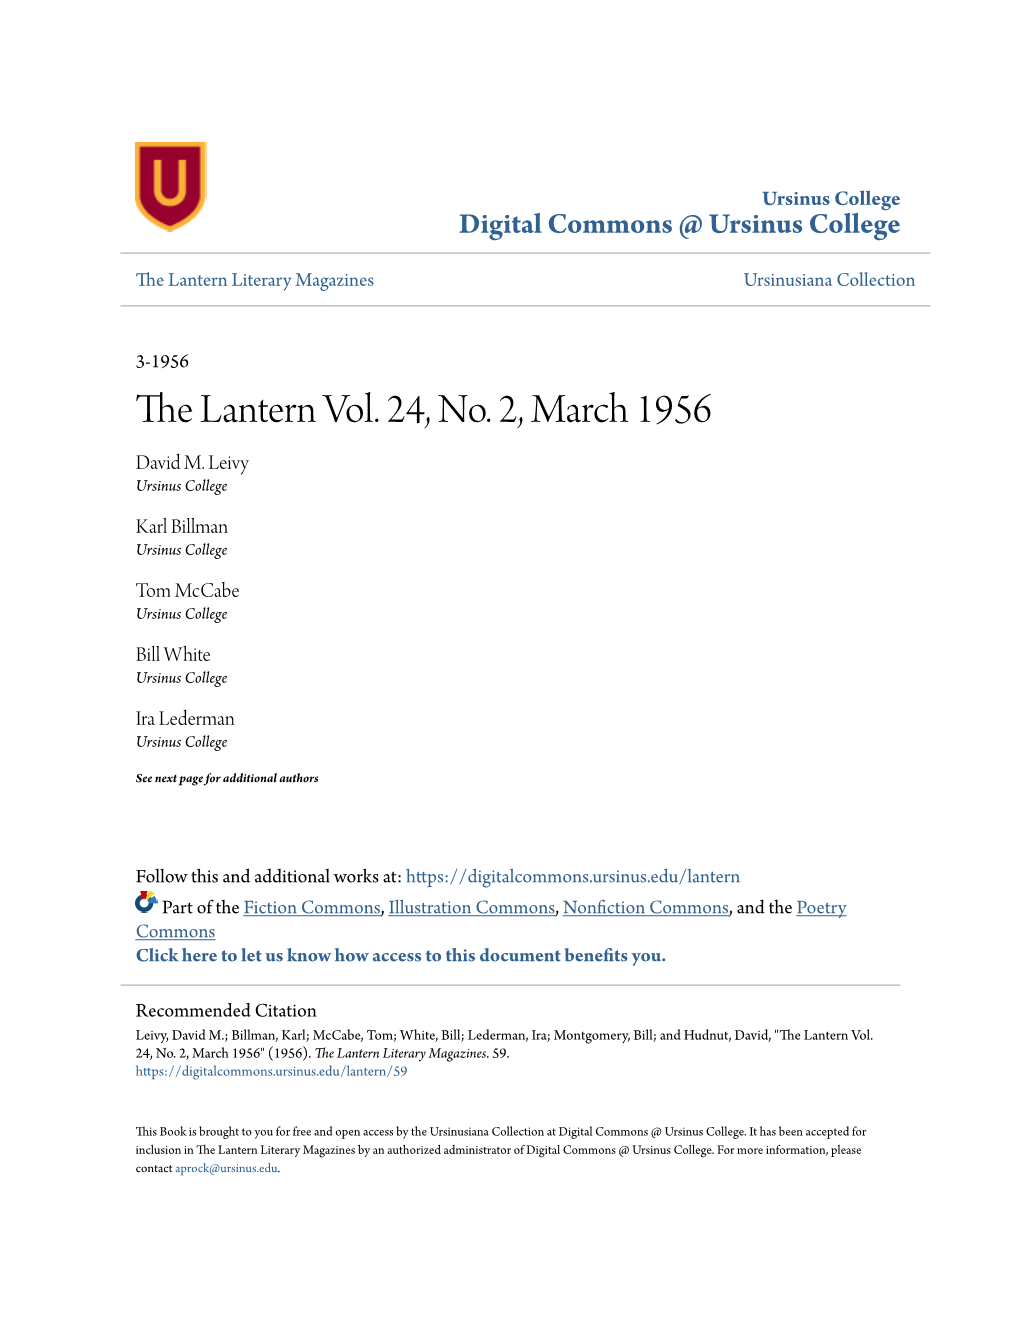 The Lantern Vol. 24, No. 2, March 1956 David M